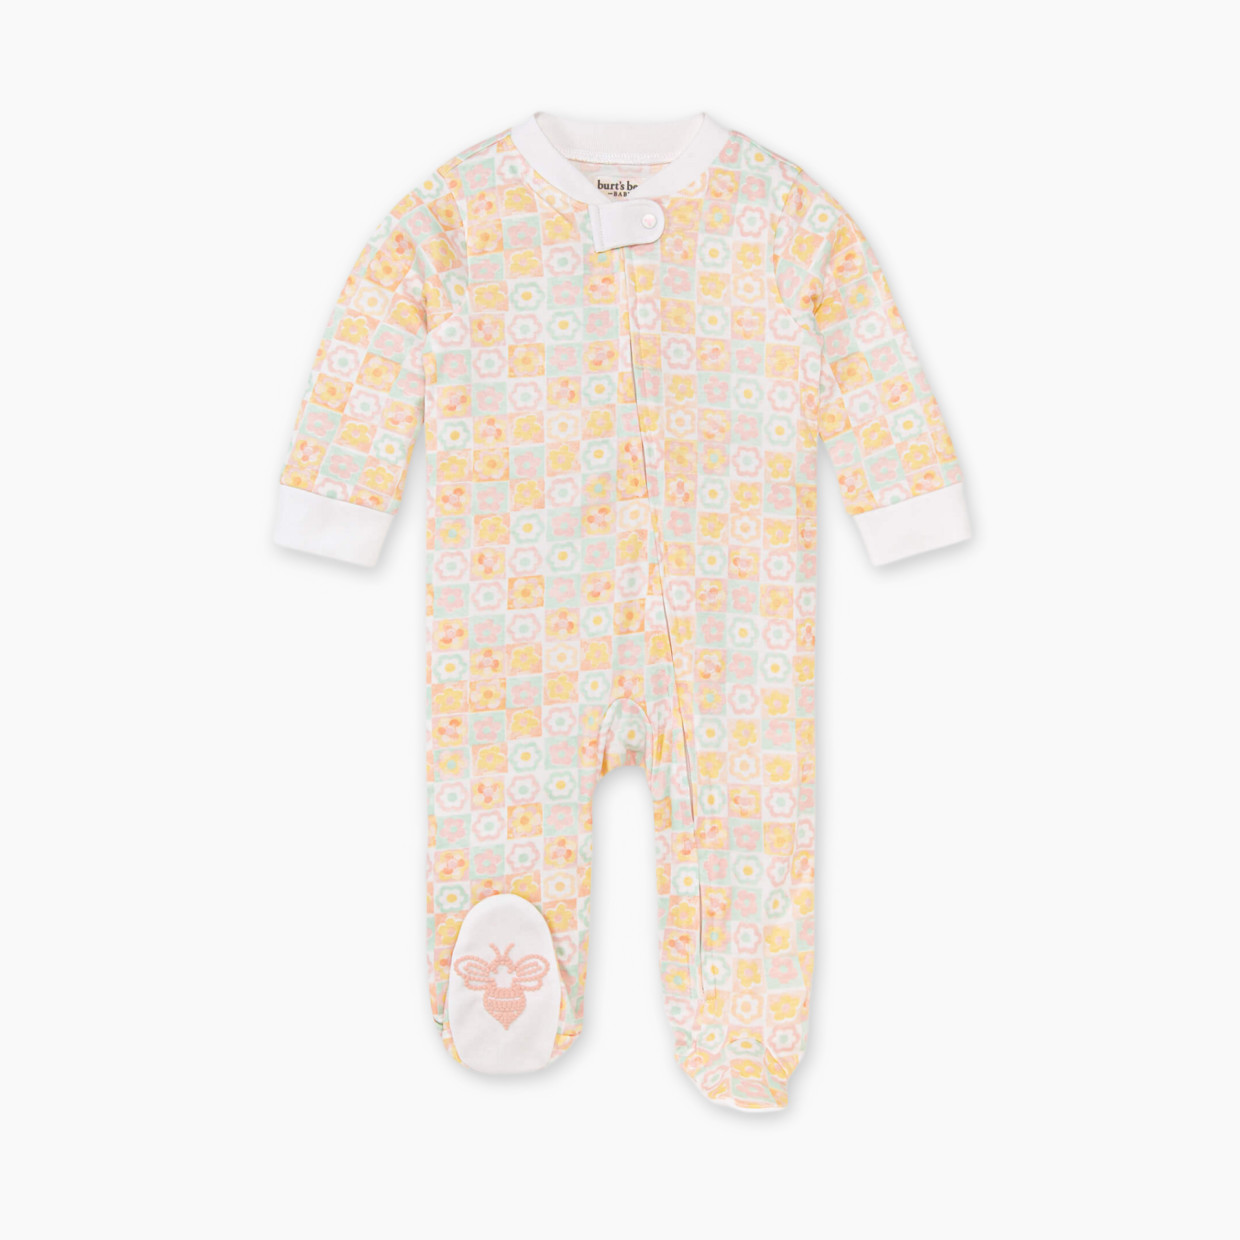 Burt's Bees Baby Organic Sleep & Play Footie Pajamas - Flower Power, 0-3 Months.